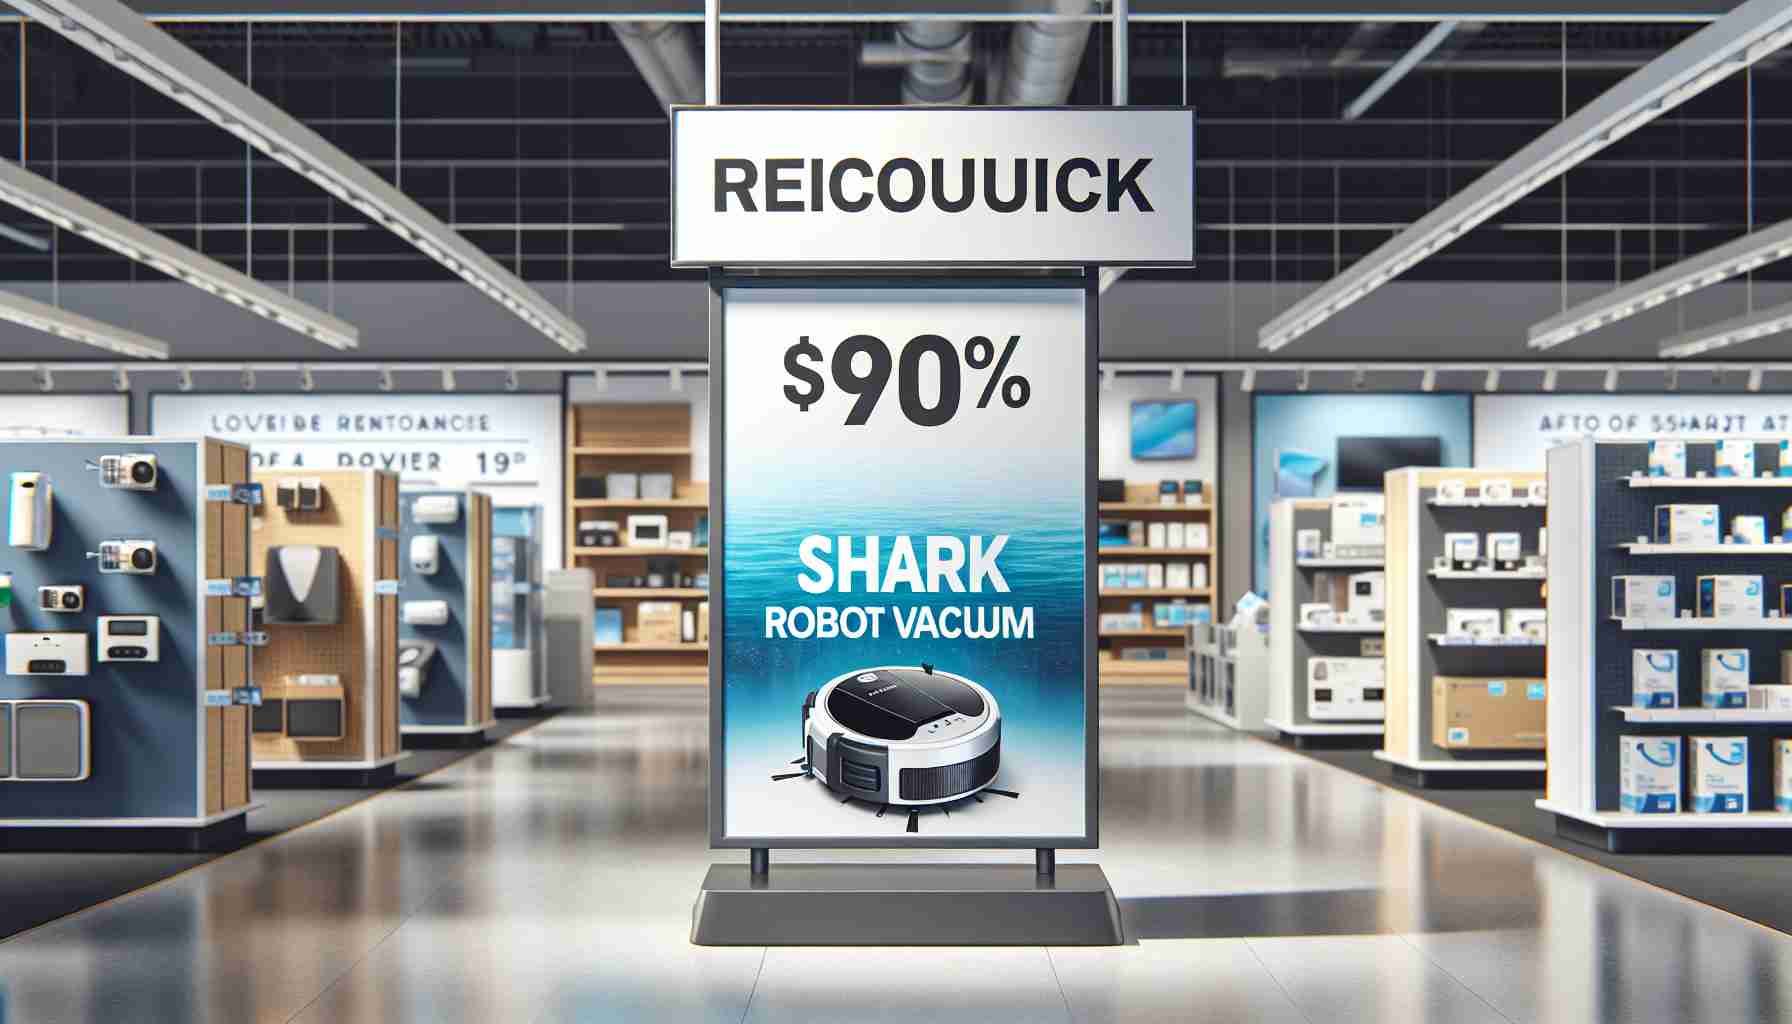 Best Buy’s Price Cut on Shark Matrix Robot Vacuum Marks Trend Towards Affordable Smart Home Tech